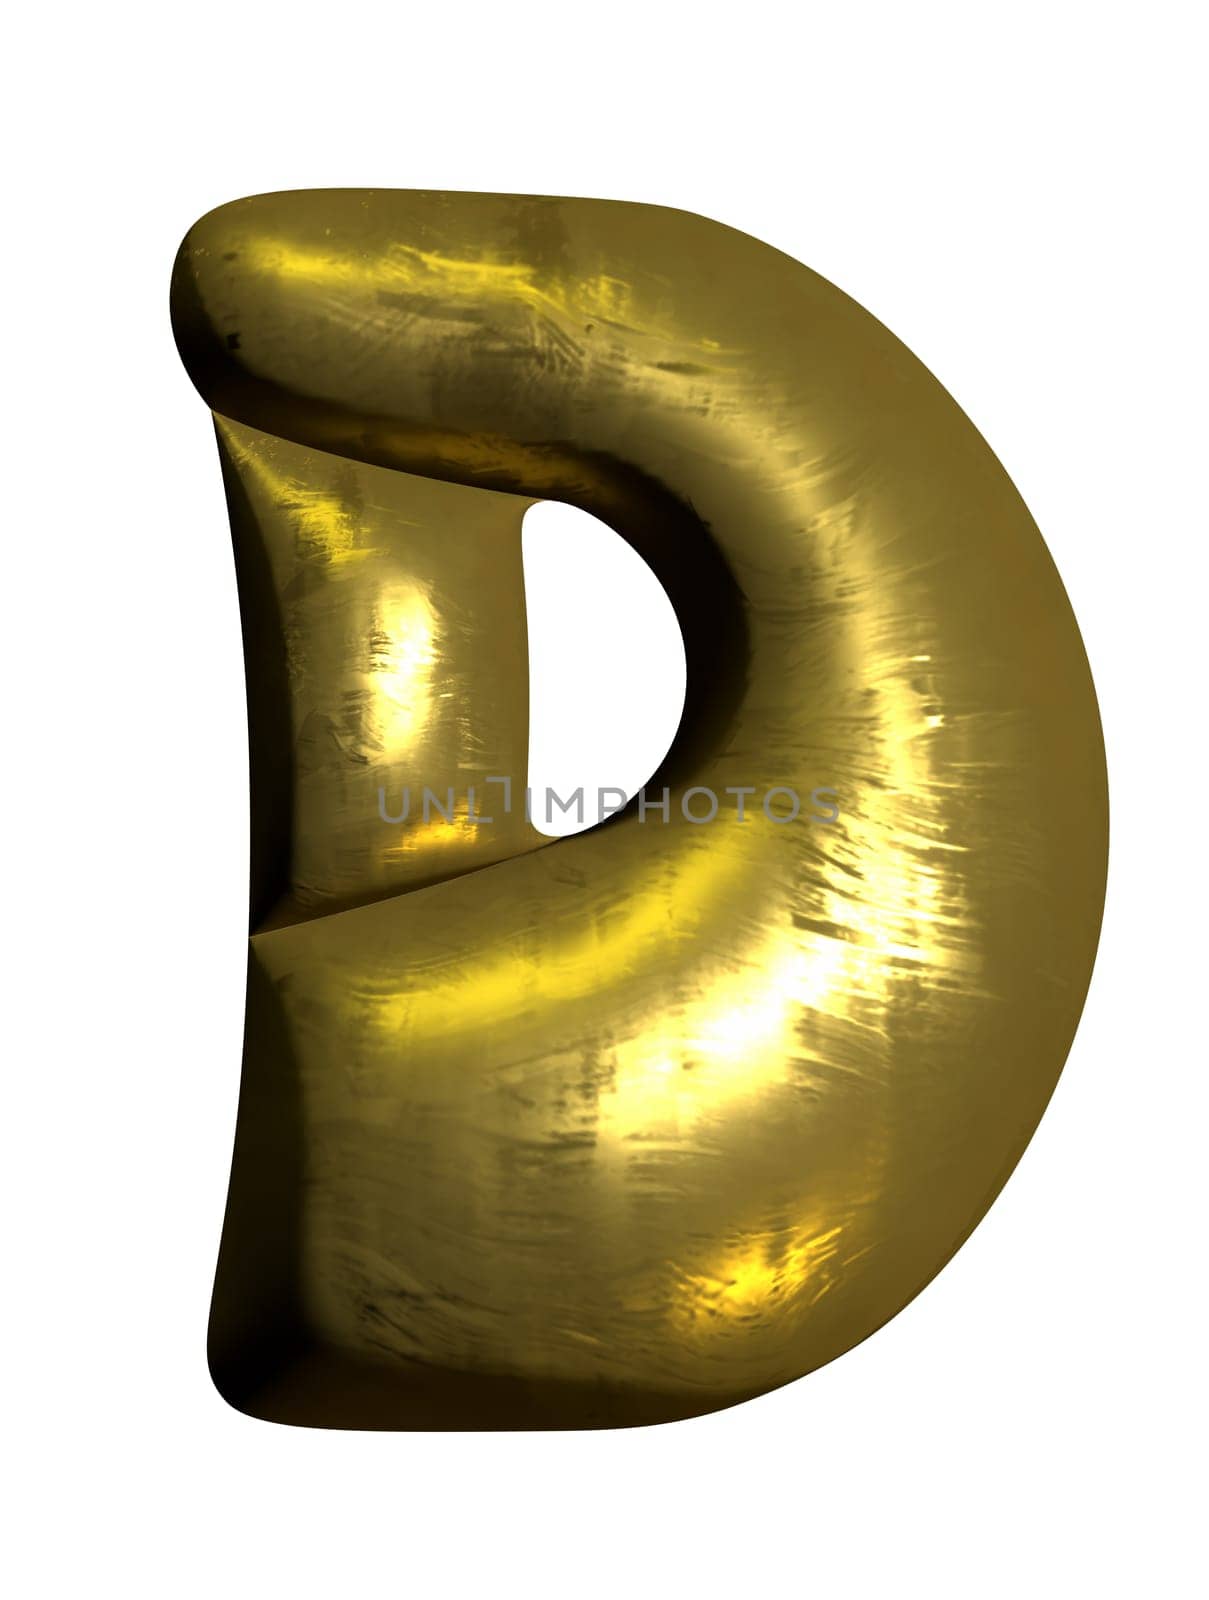 Shiny gold balloon metallic letter D capital. by hadkhanong